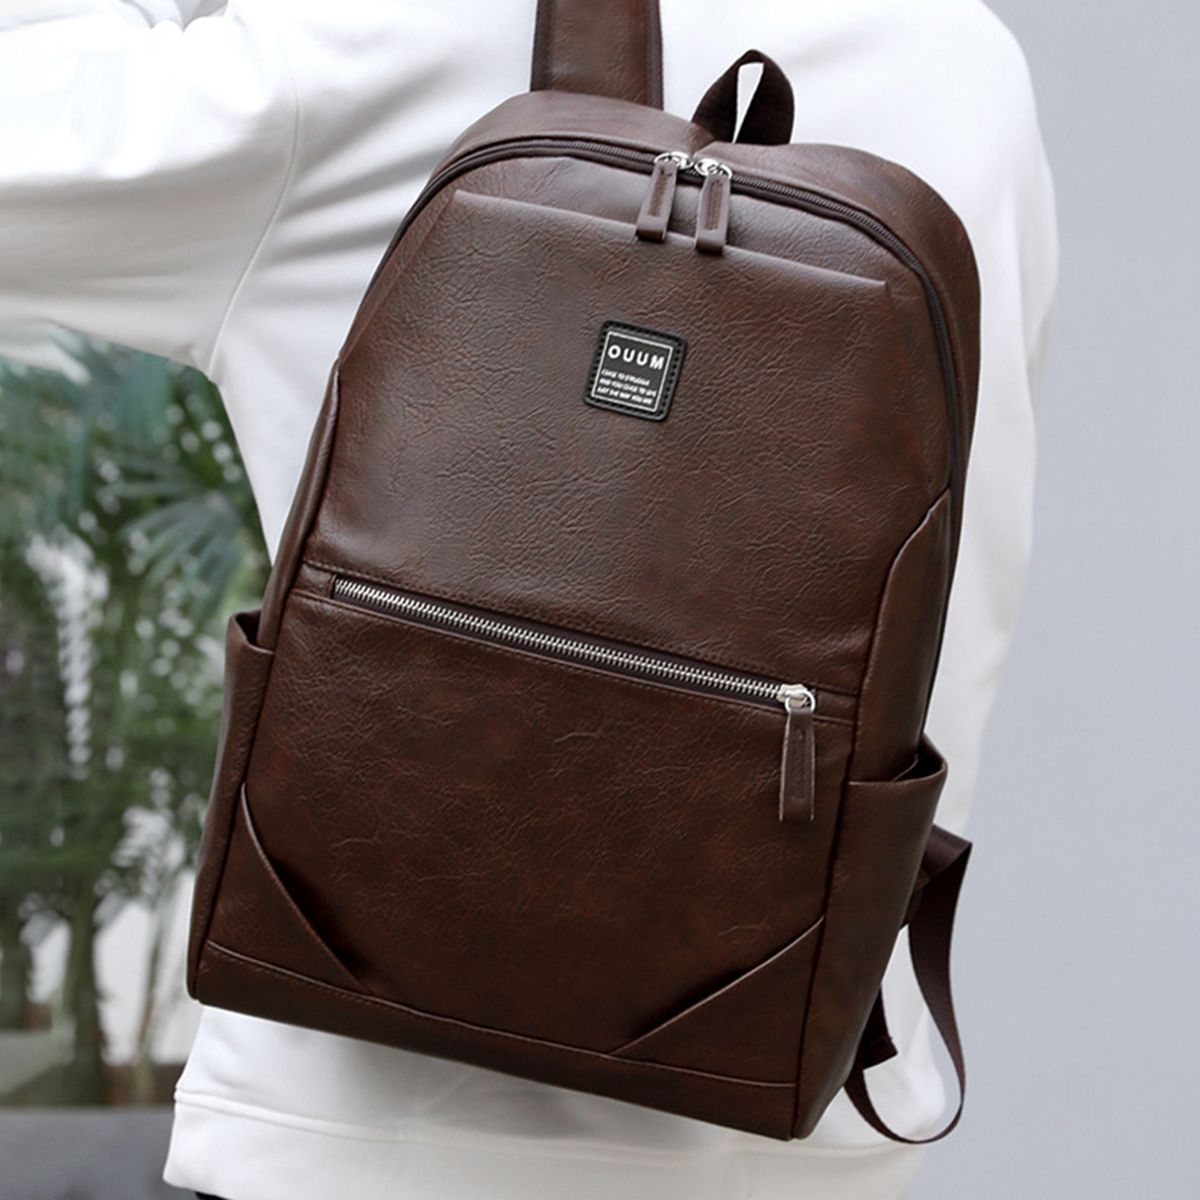 156-Inch-Zipper-PU-Laptop-Bag-Business-Travel-Portable-Mens-Briefcases-Messenger-Documents-Handbags-1763173